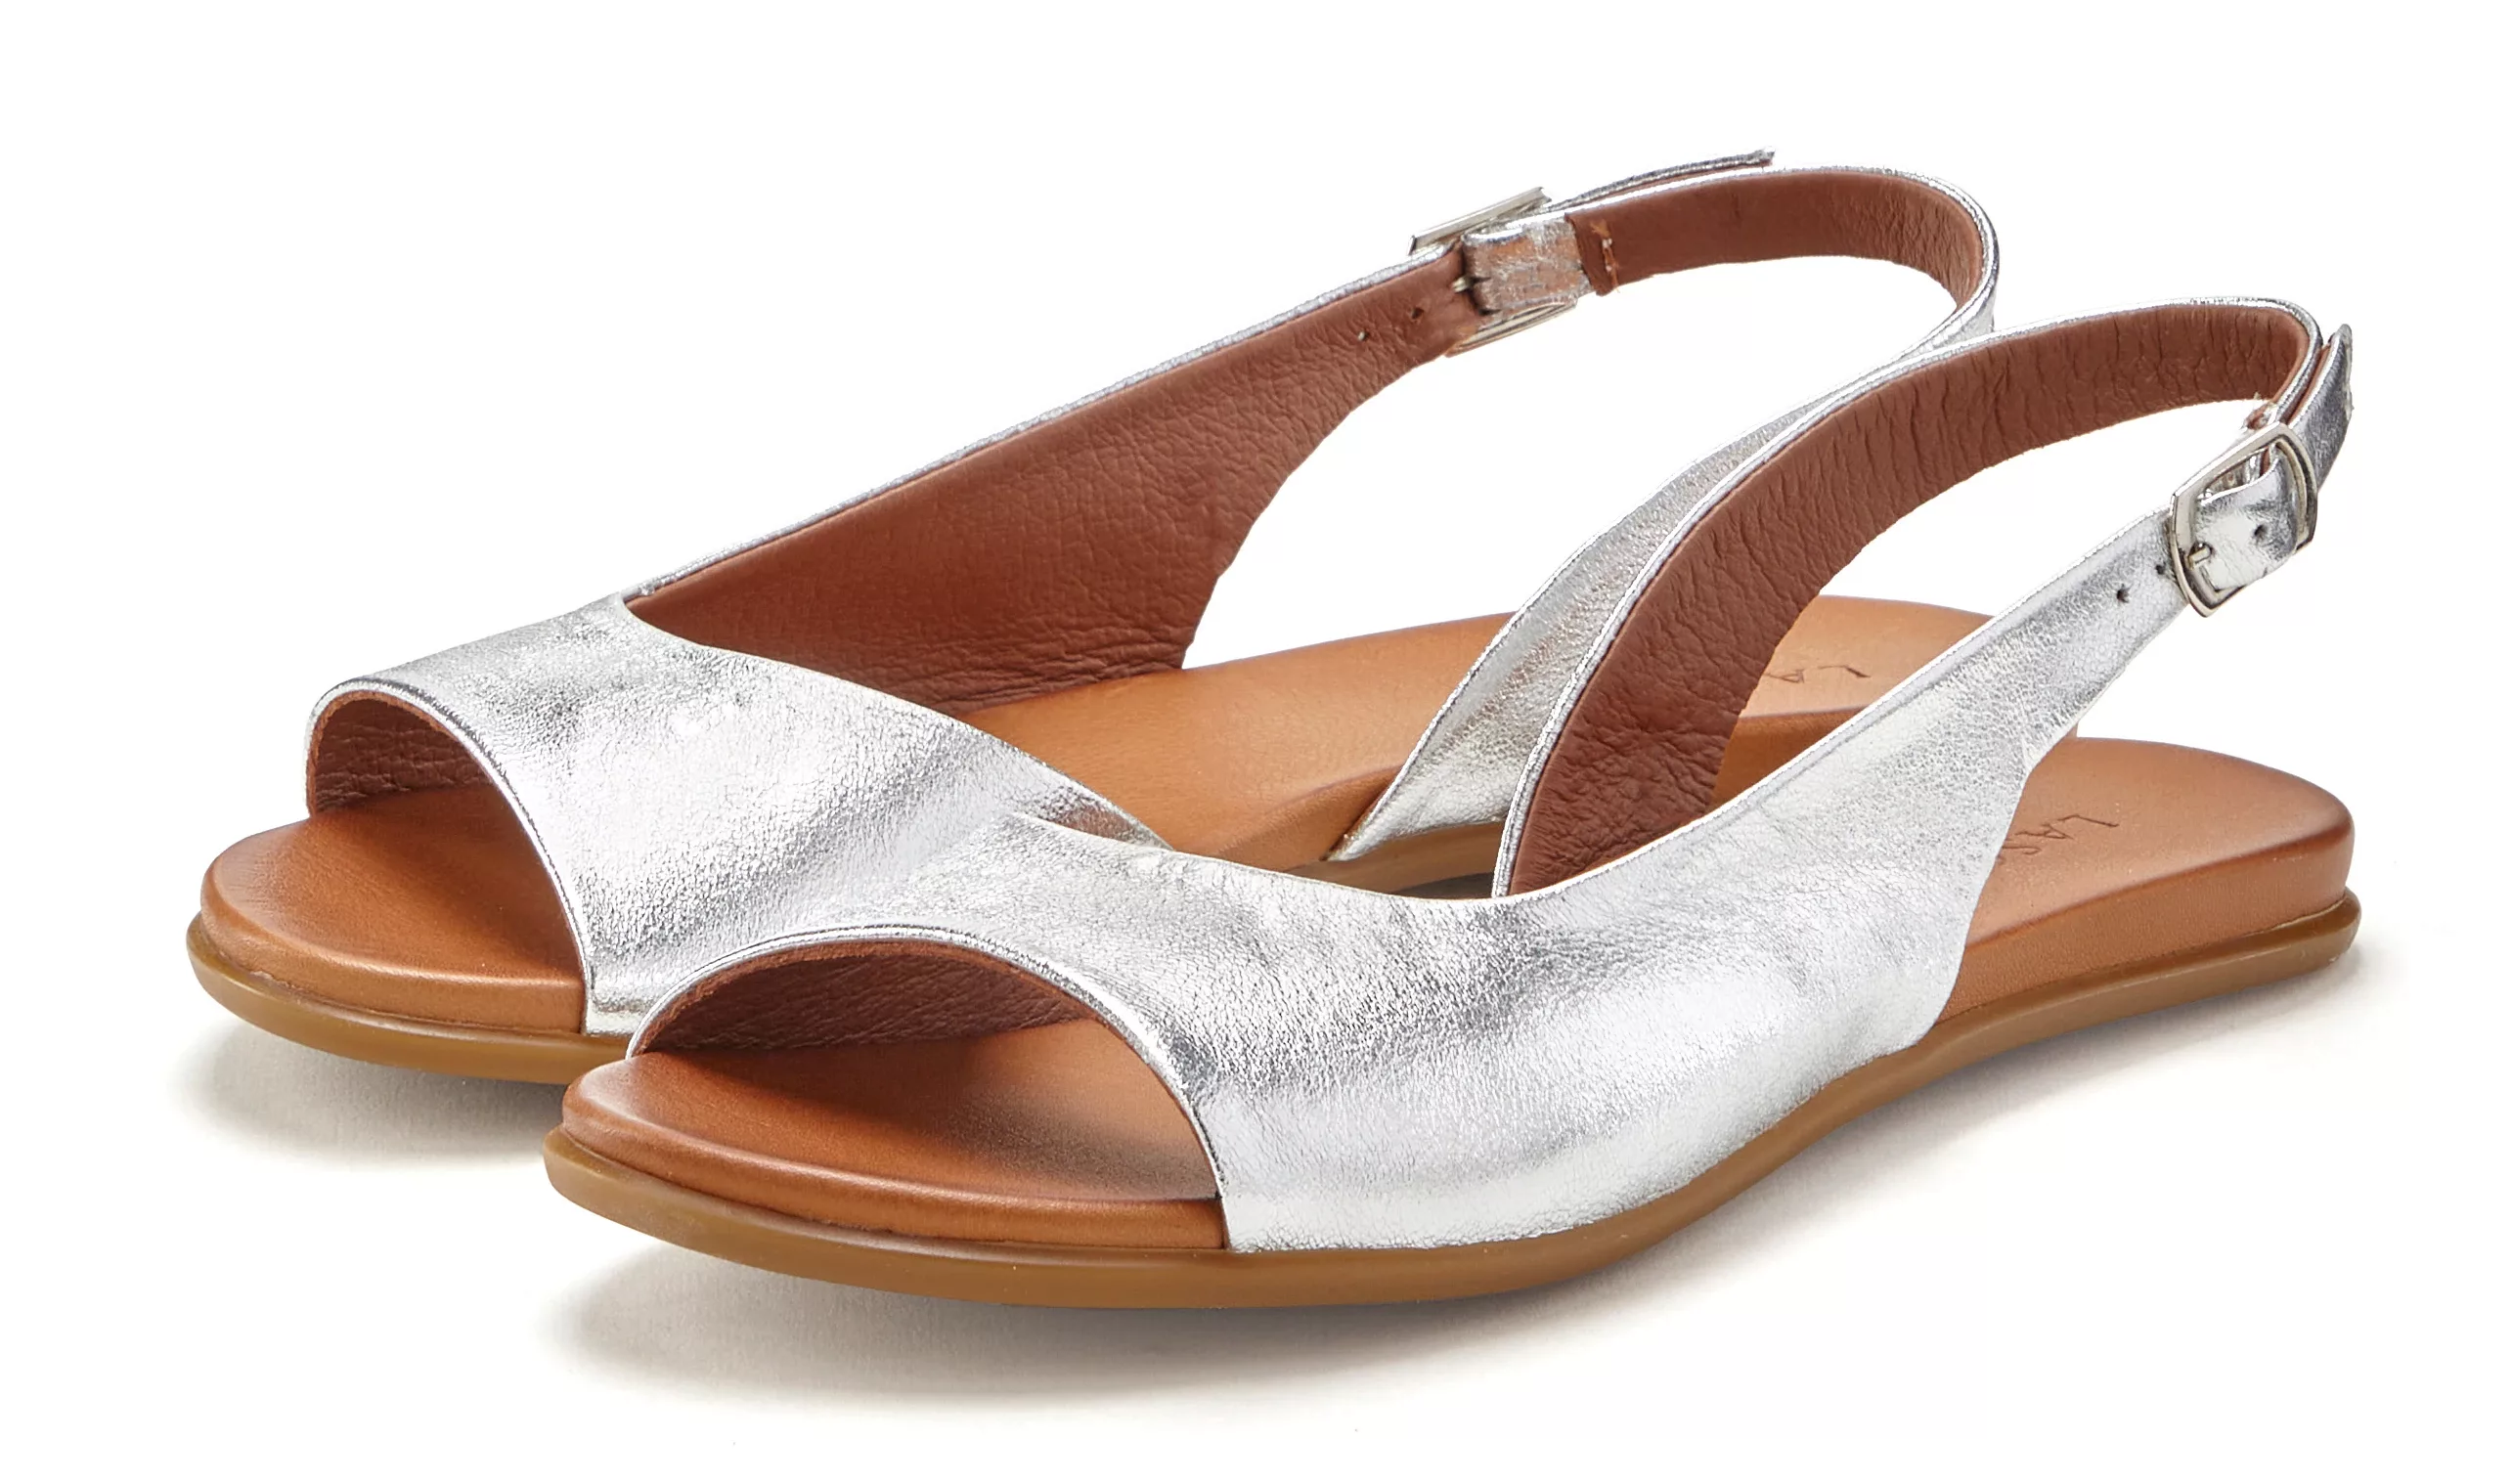 LASCANA Sandale, aus Leder in modischer Metallic-Optik, Sandalette, Sommers günstig online kaufen